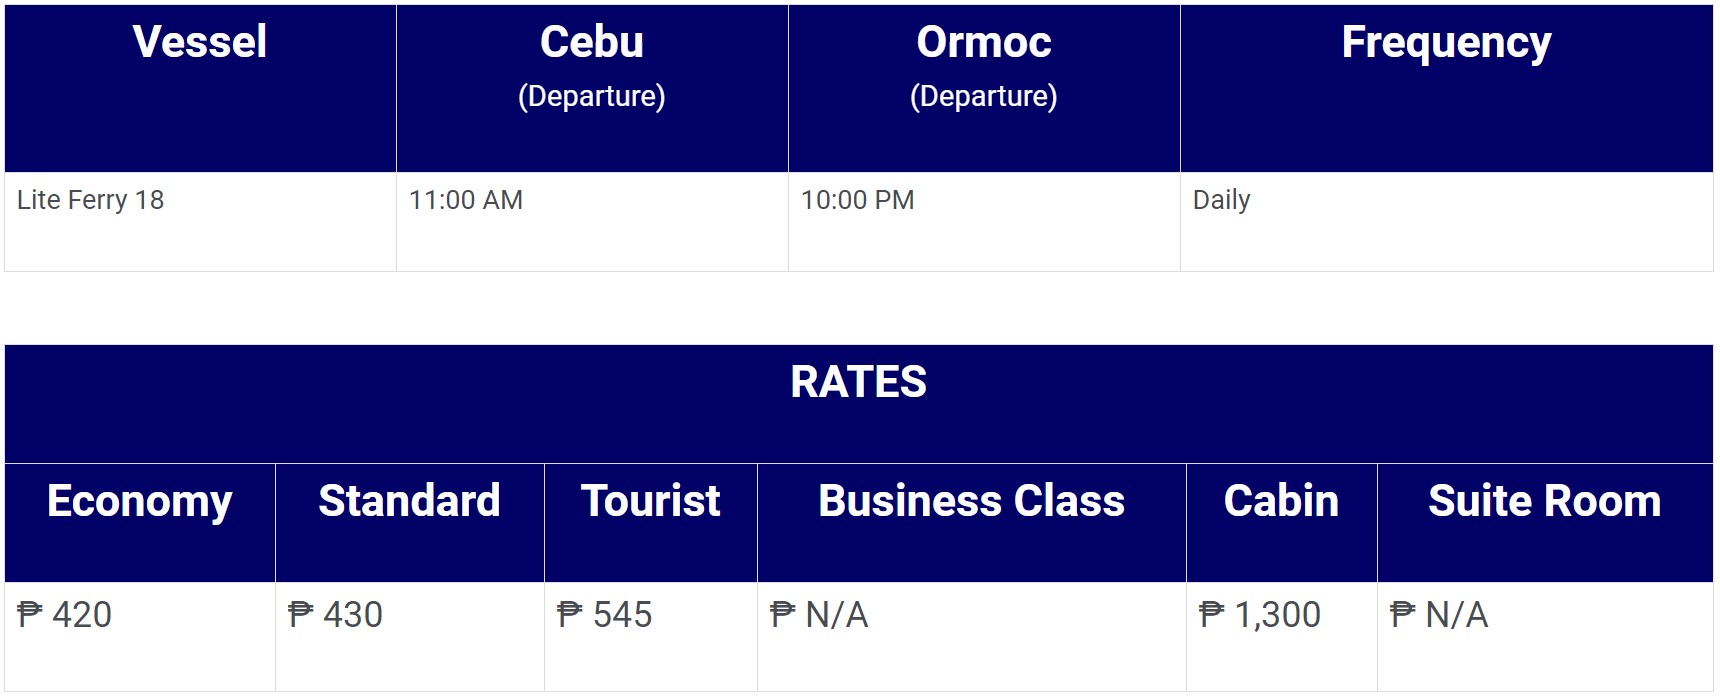 Lite Ferries Cebu-Ormoc Schedule and Fares